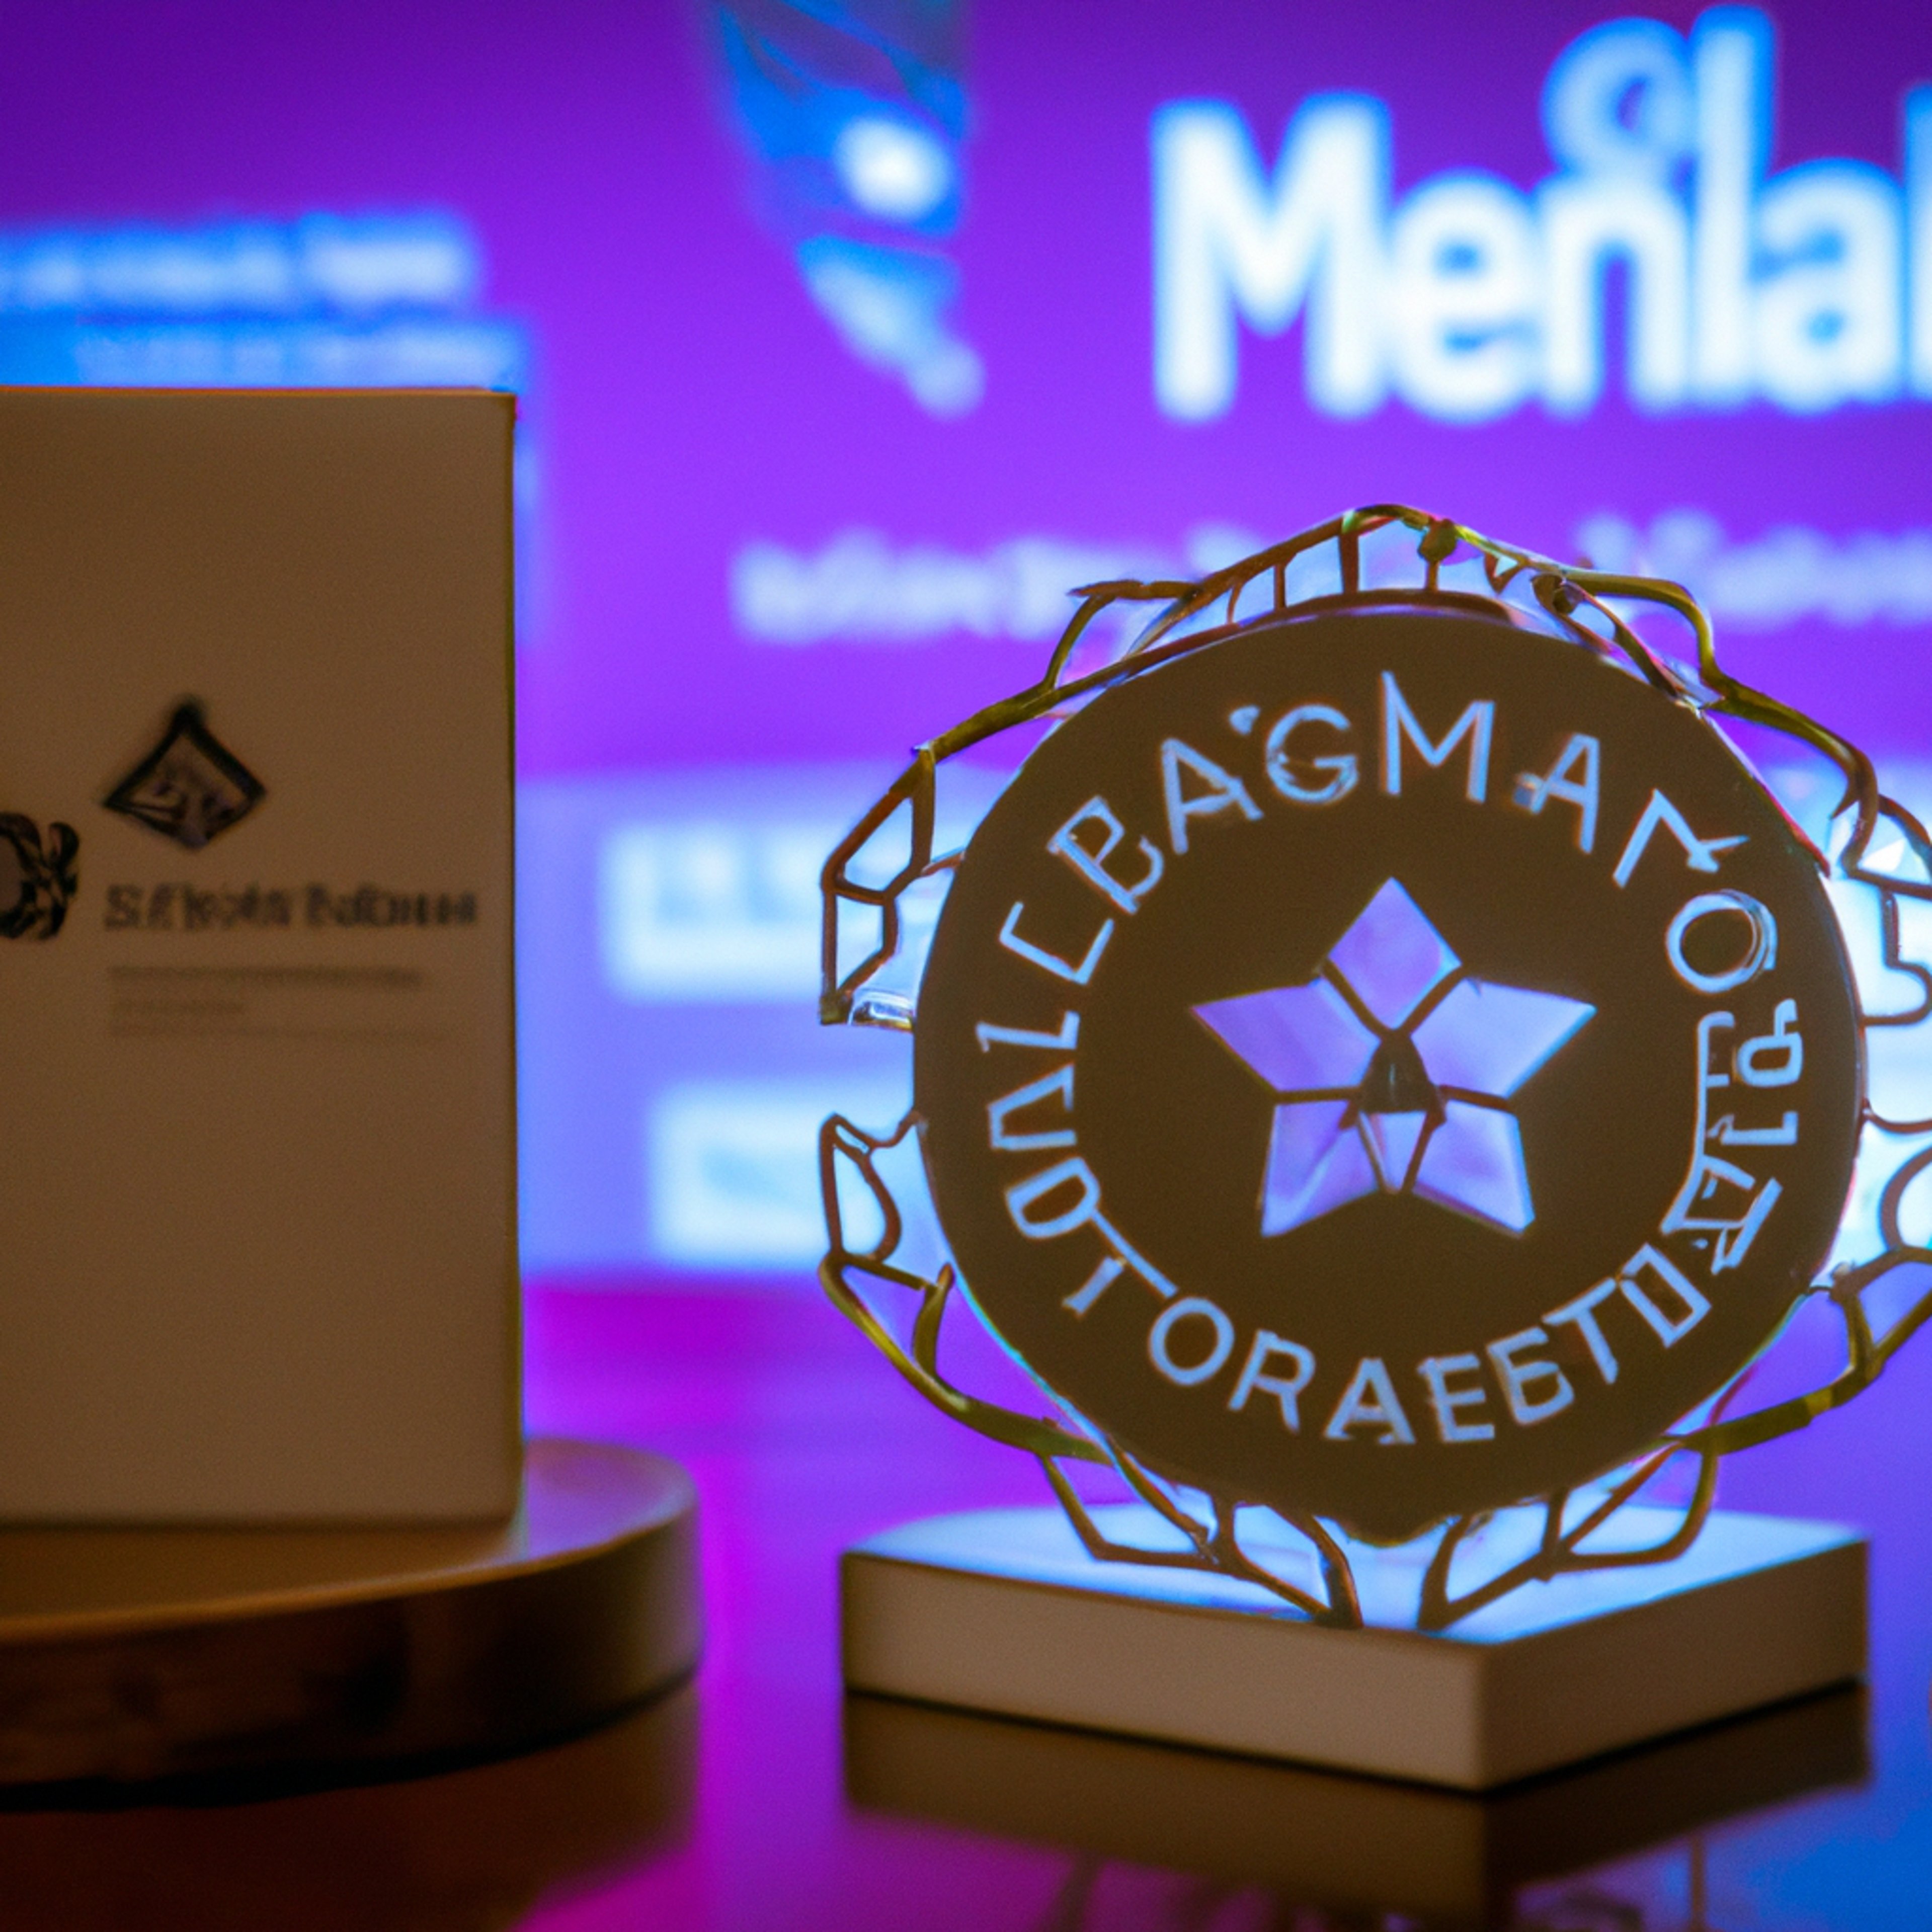 MoneyGram Wins "Best Use of Blockchain in FinTech" Award, Stellar Lumens Benefits from Partnership